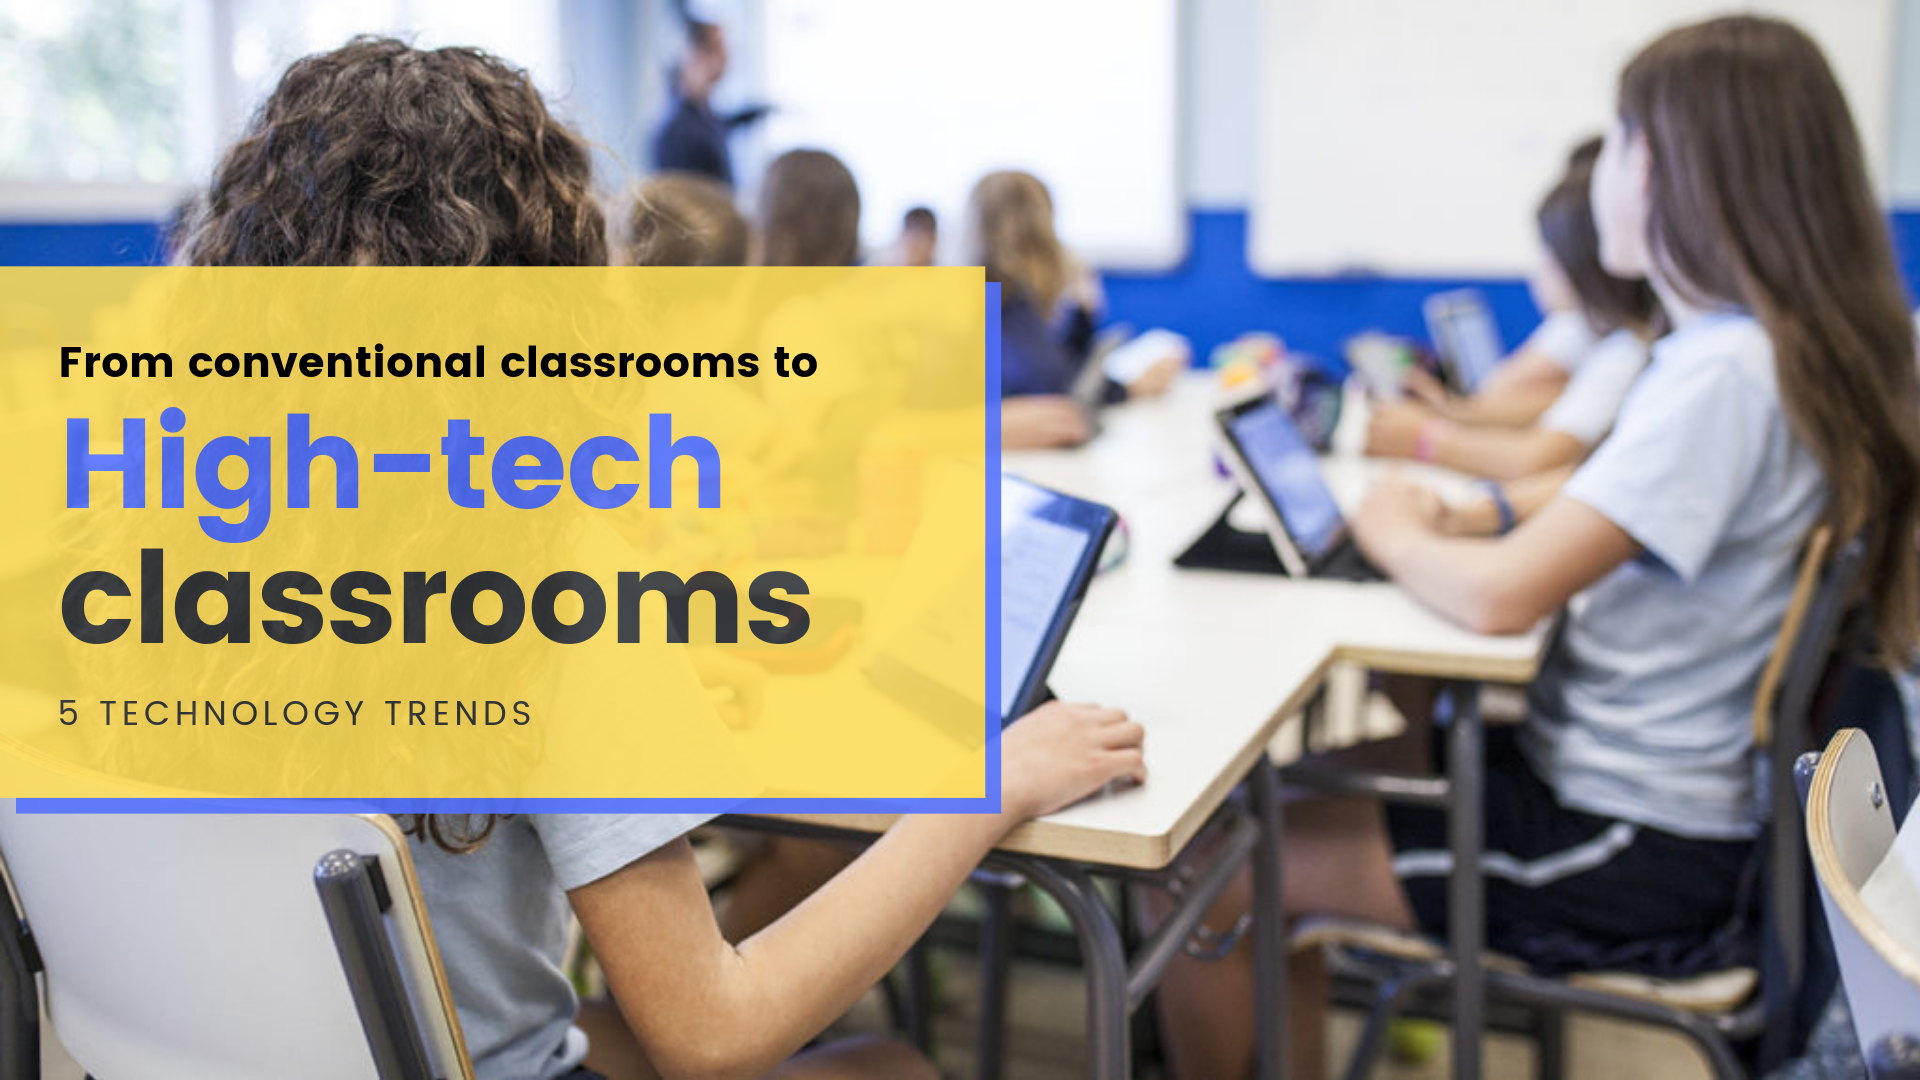 High-tech classrooms